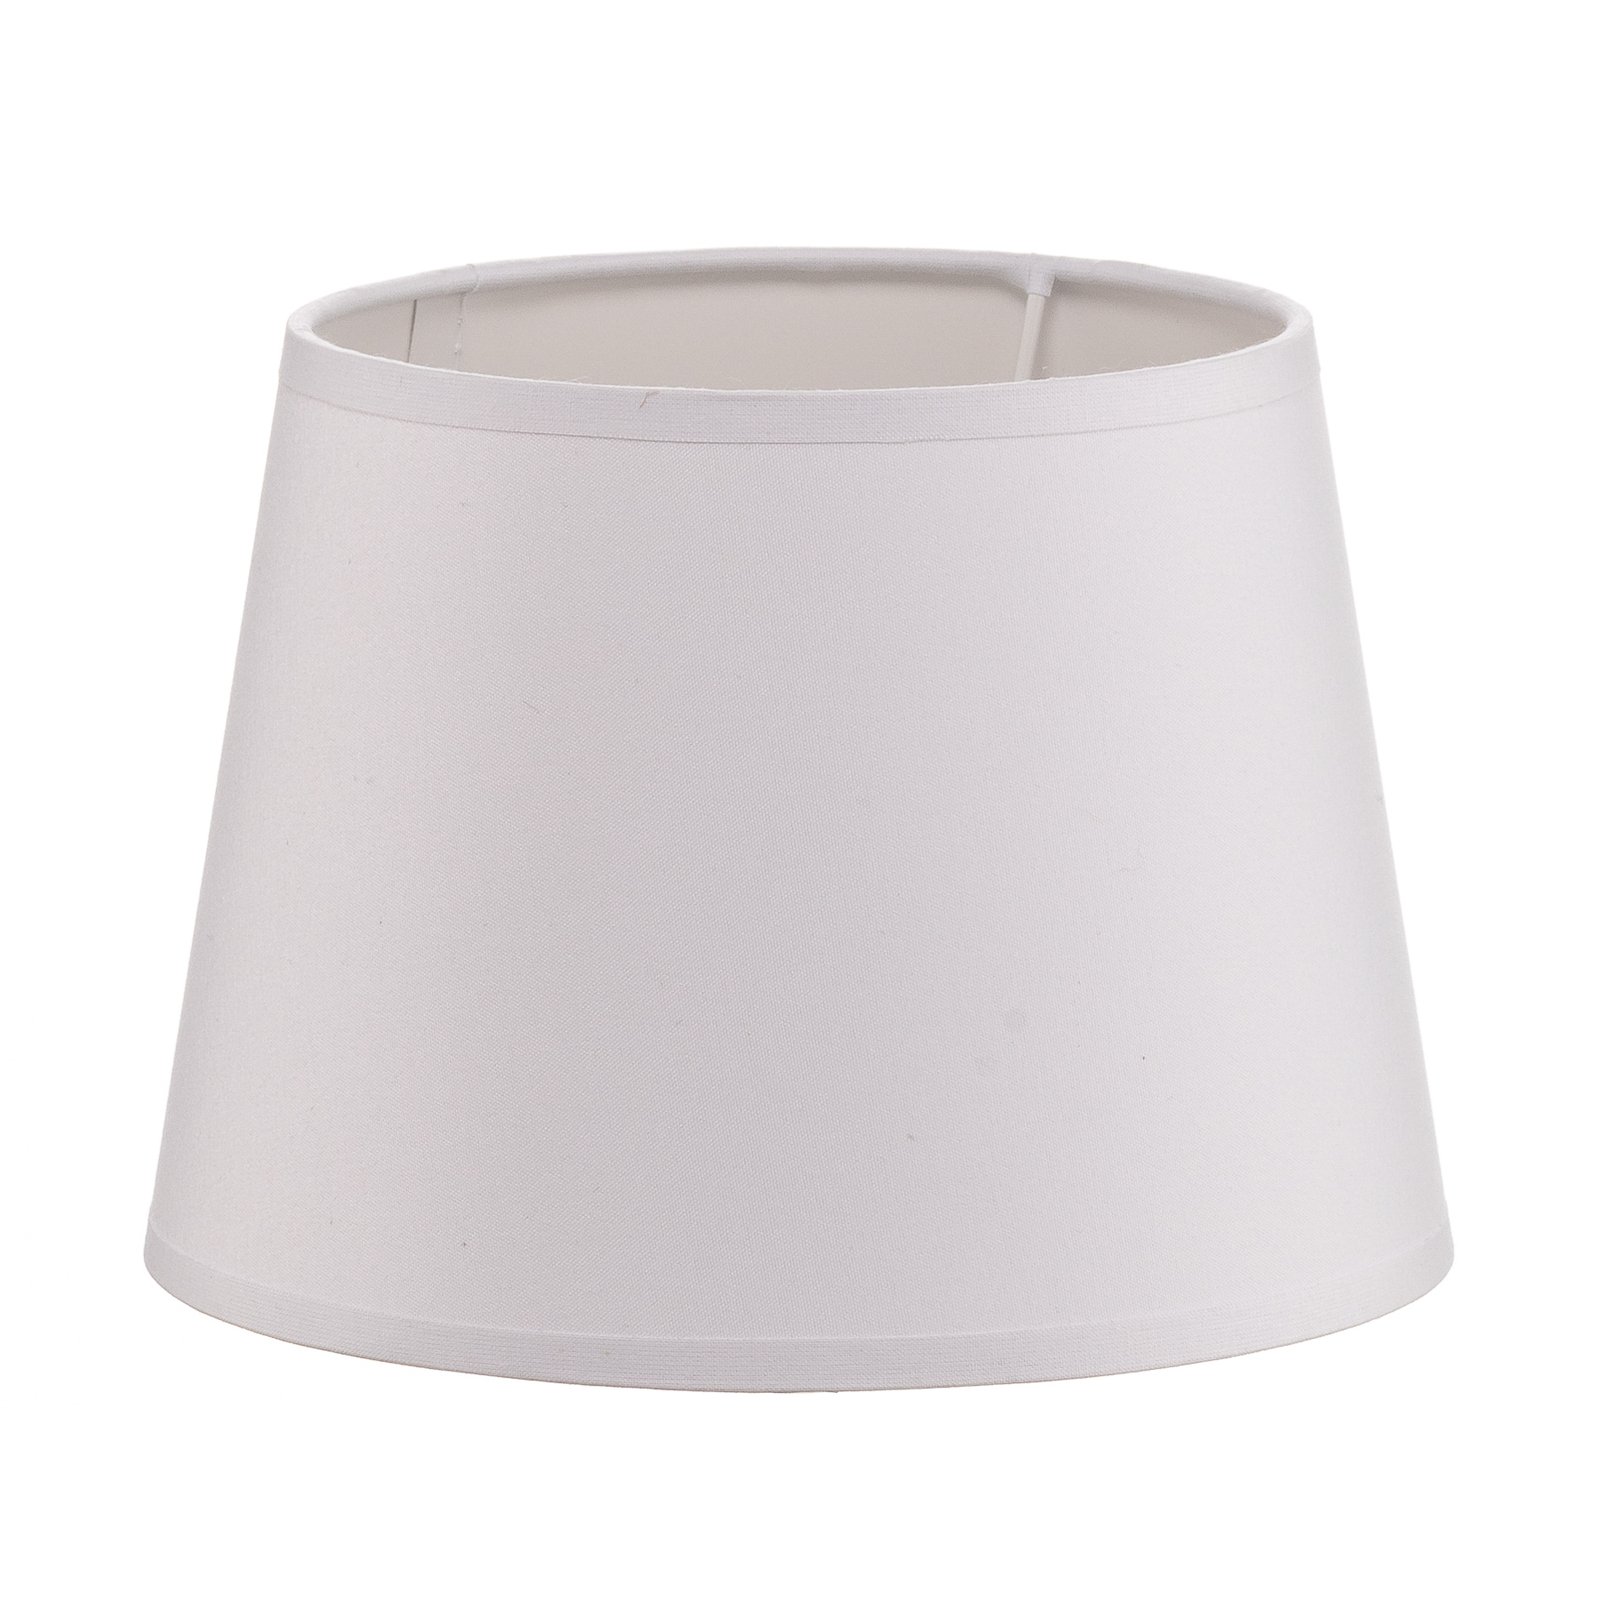 Classic S lampshade, white